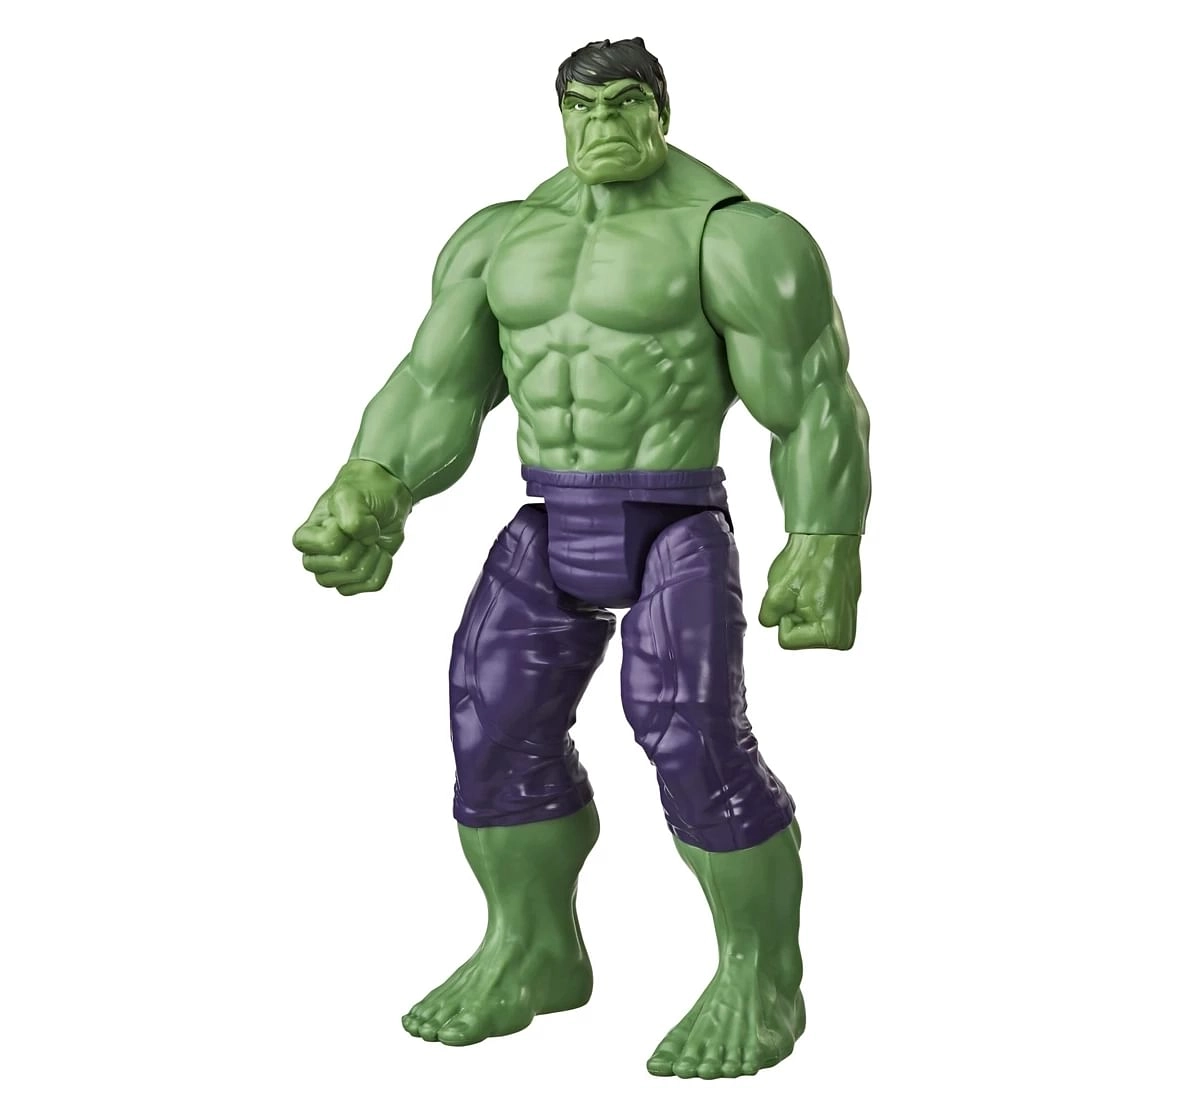 Marvel Hulk 6inch Basic Action Figure 4Y+, Multicolour